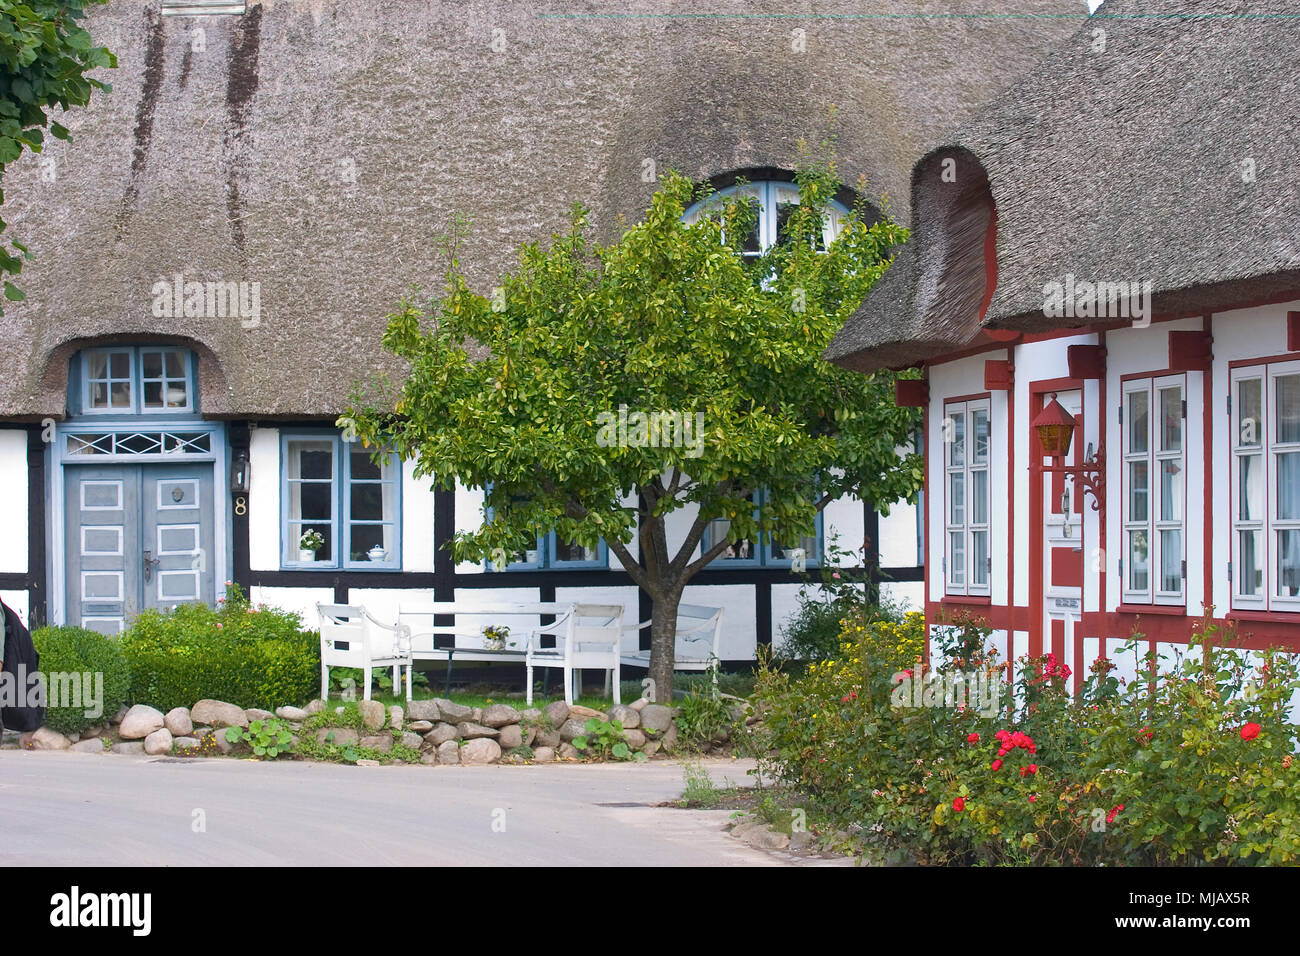 Historische Gebaeude in Nordby, Insel Samsoe, Kattegat, Daenemark Foto Stock